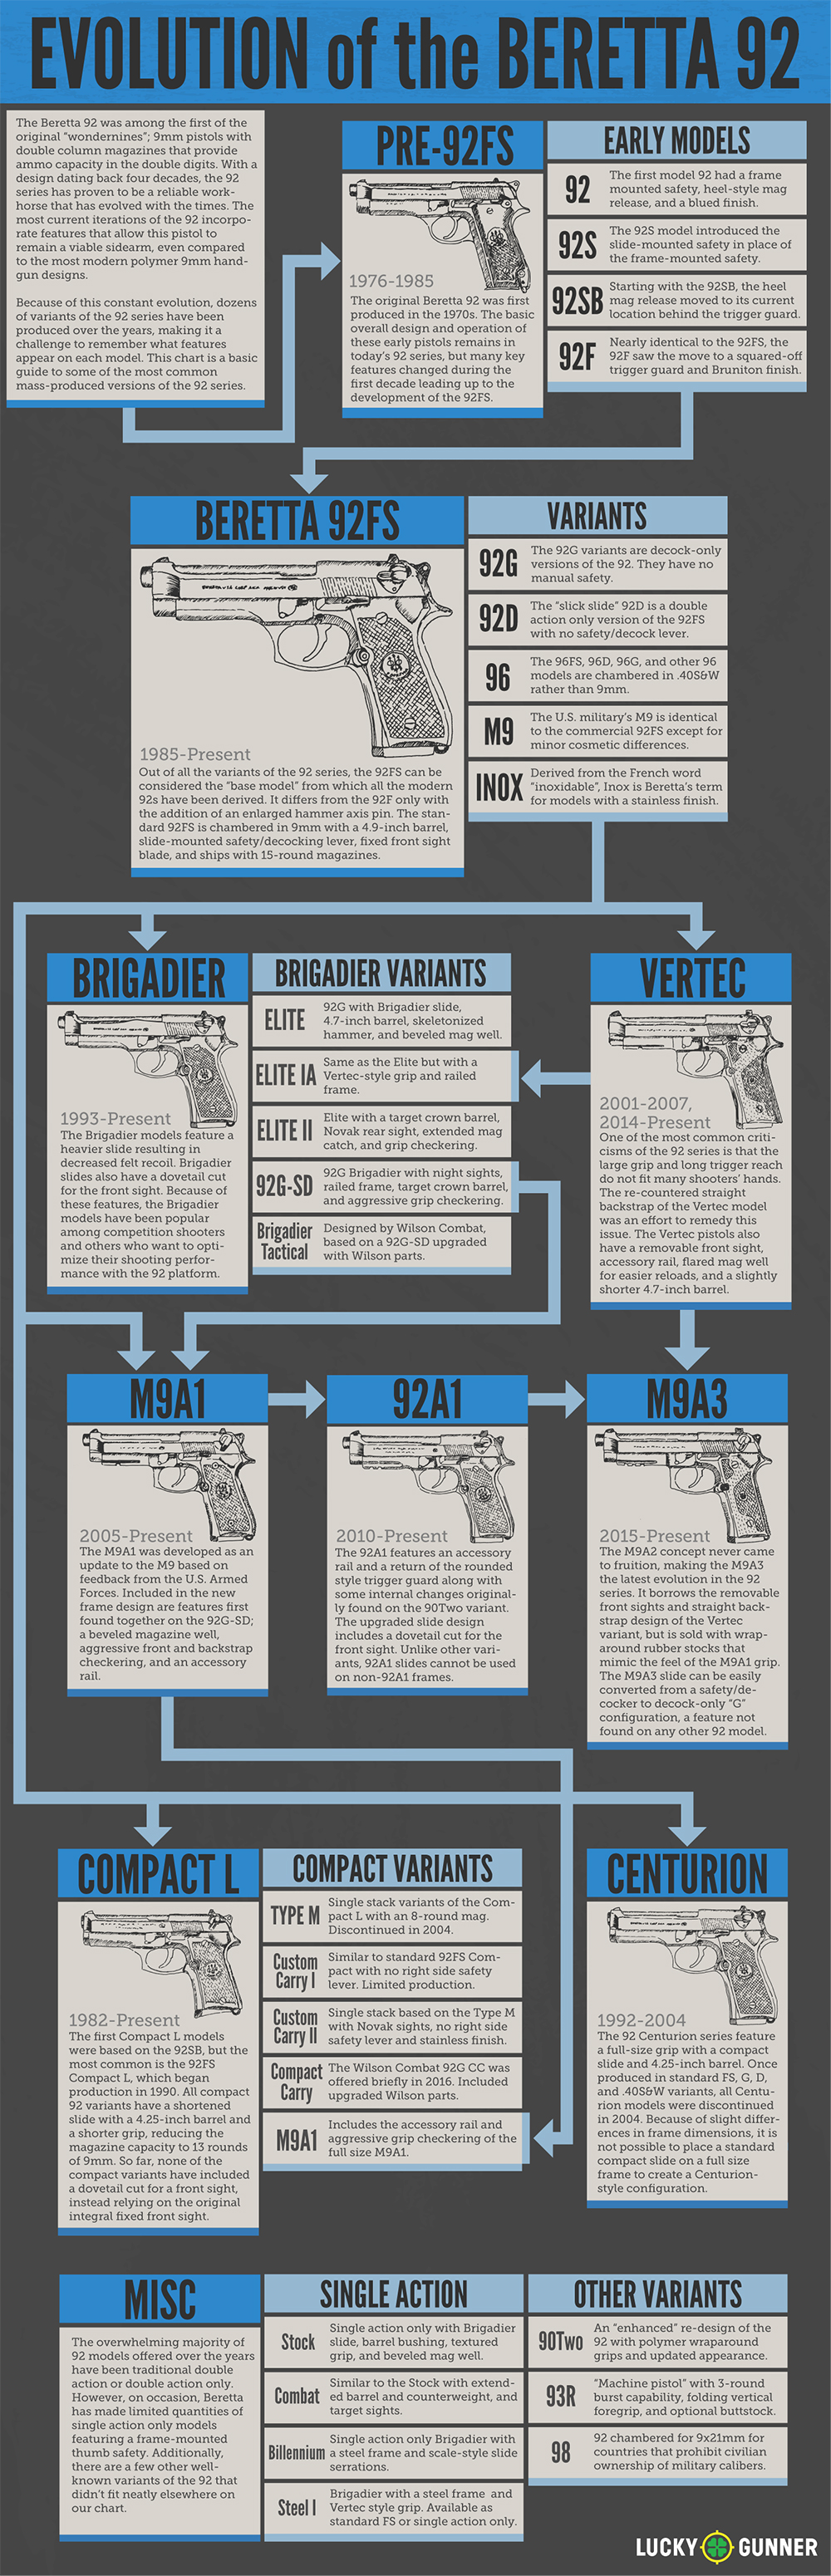 Evolution of the Beretta 92